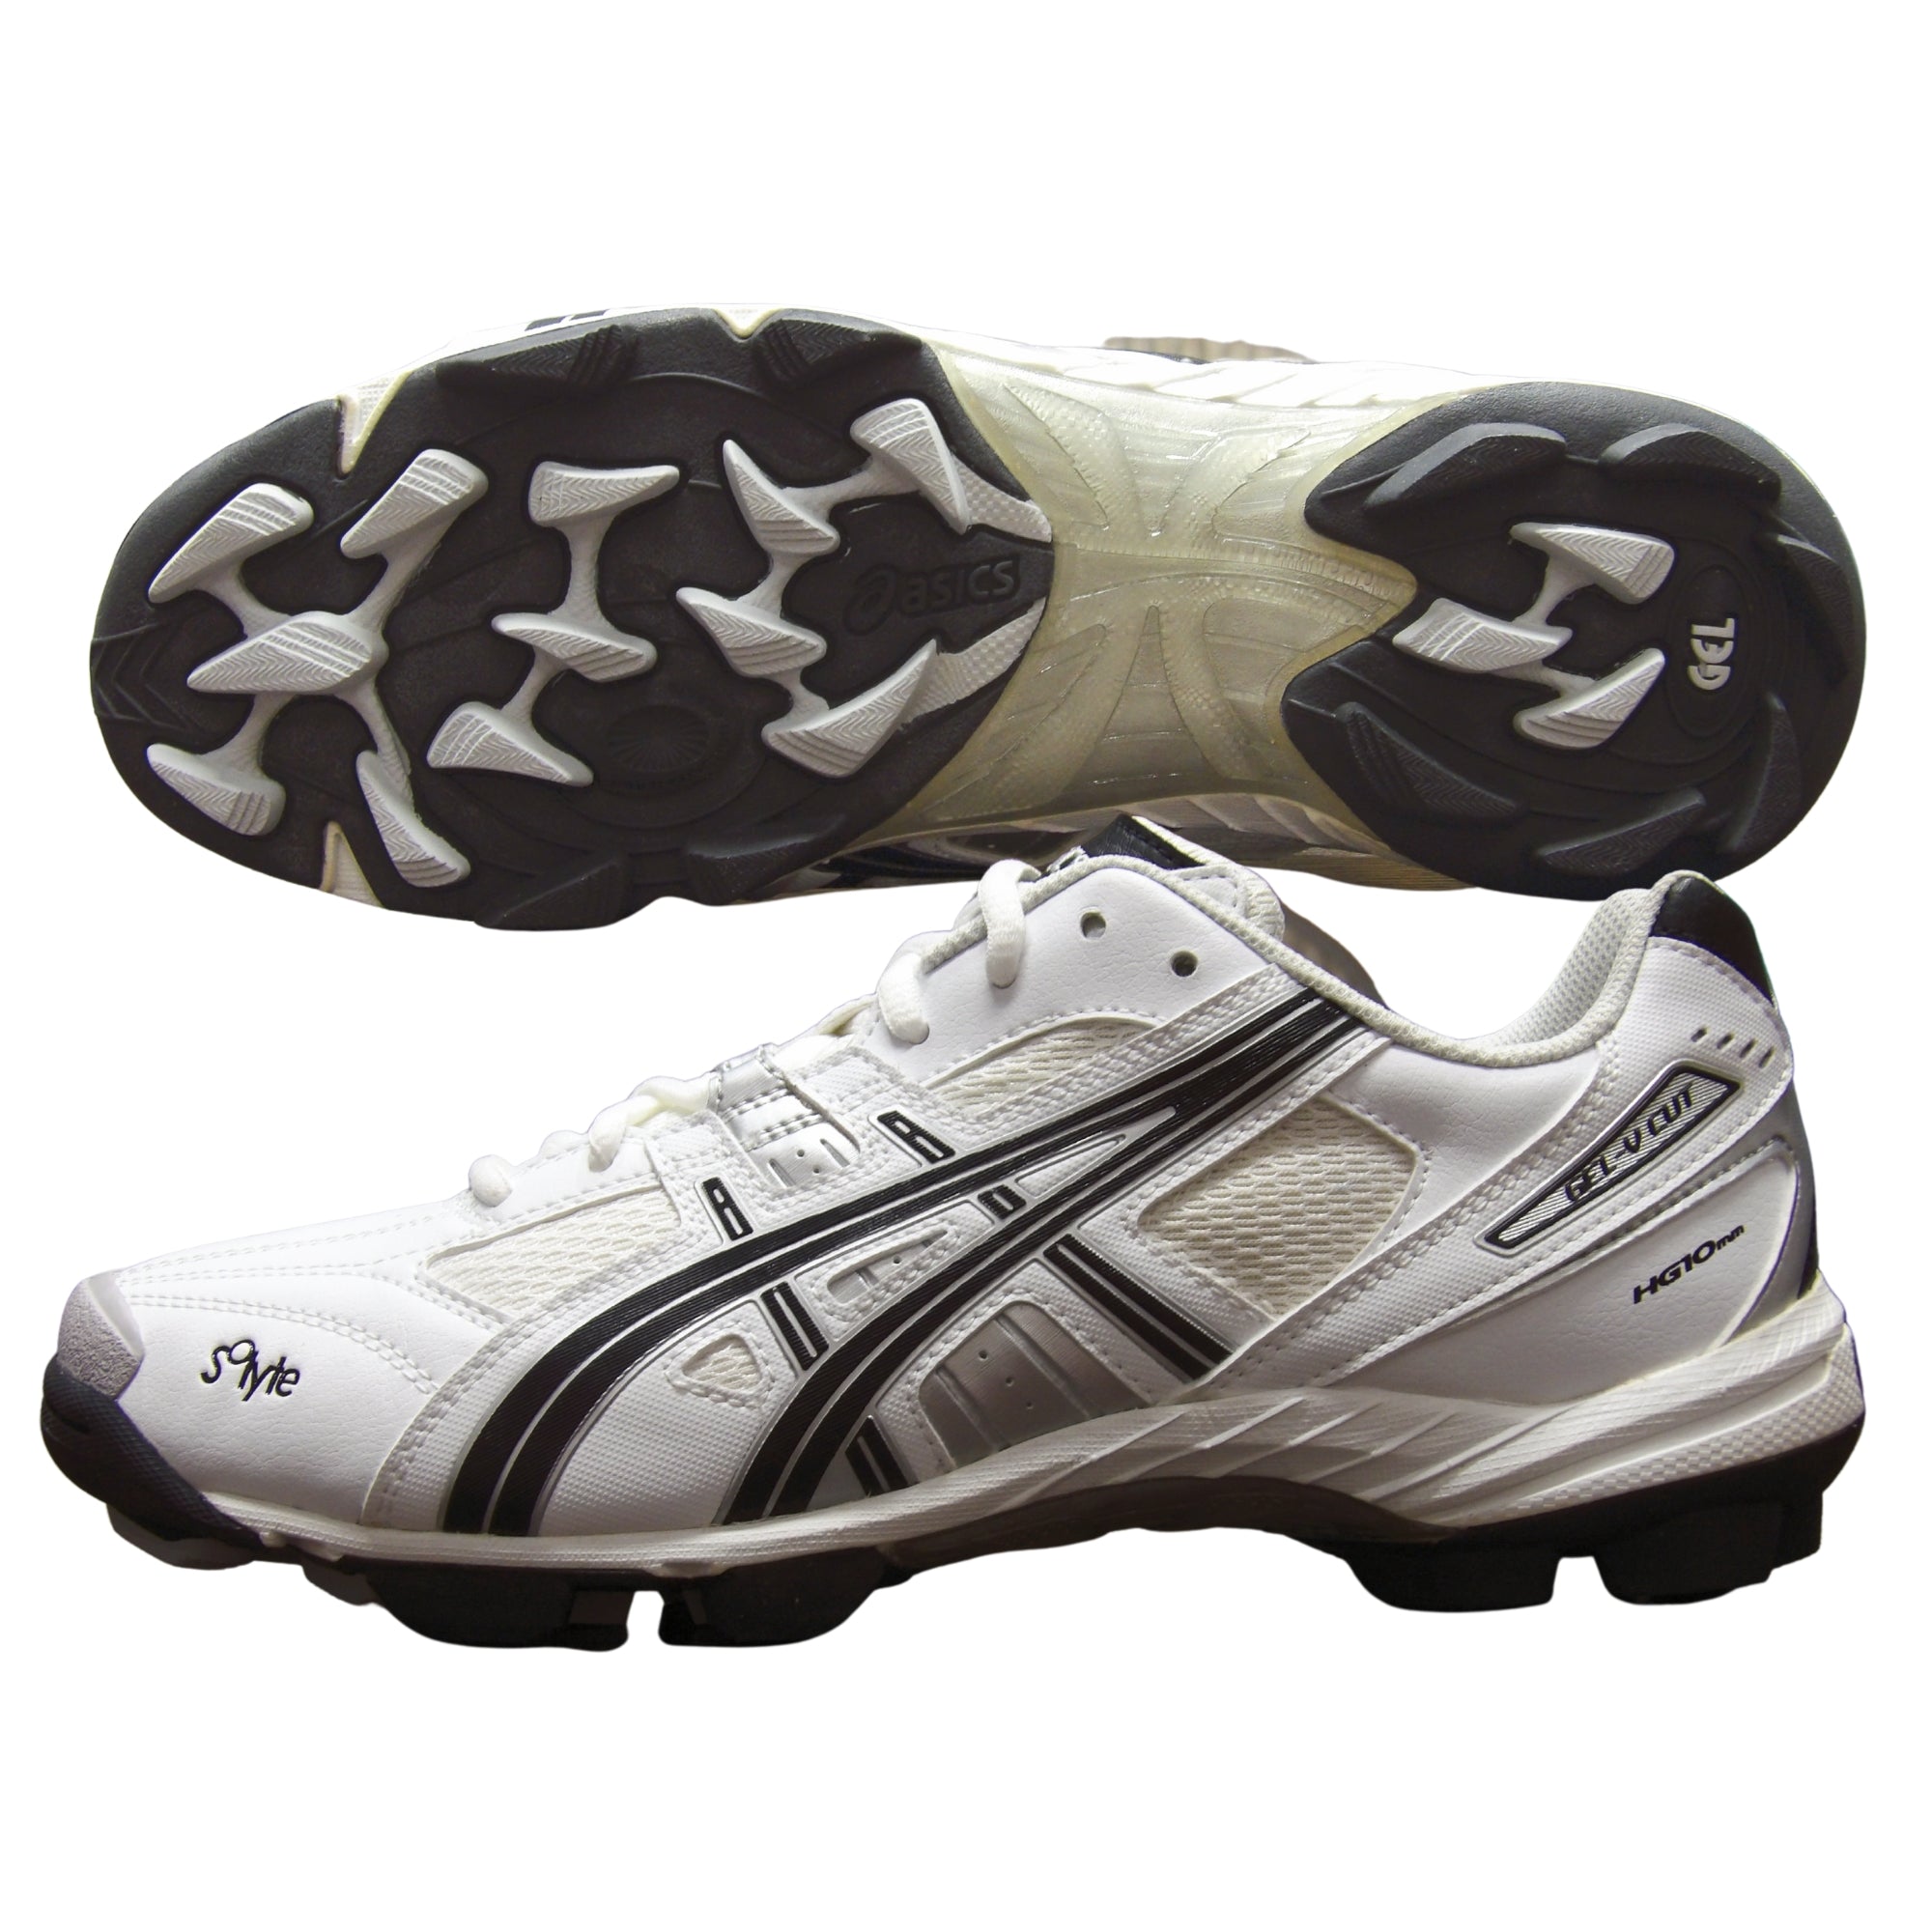 Asics Cricket Shoes, Model Gel V-Cut - White/Black/Silver